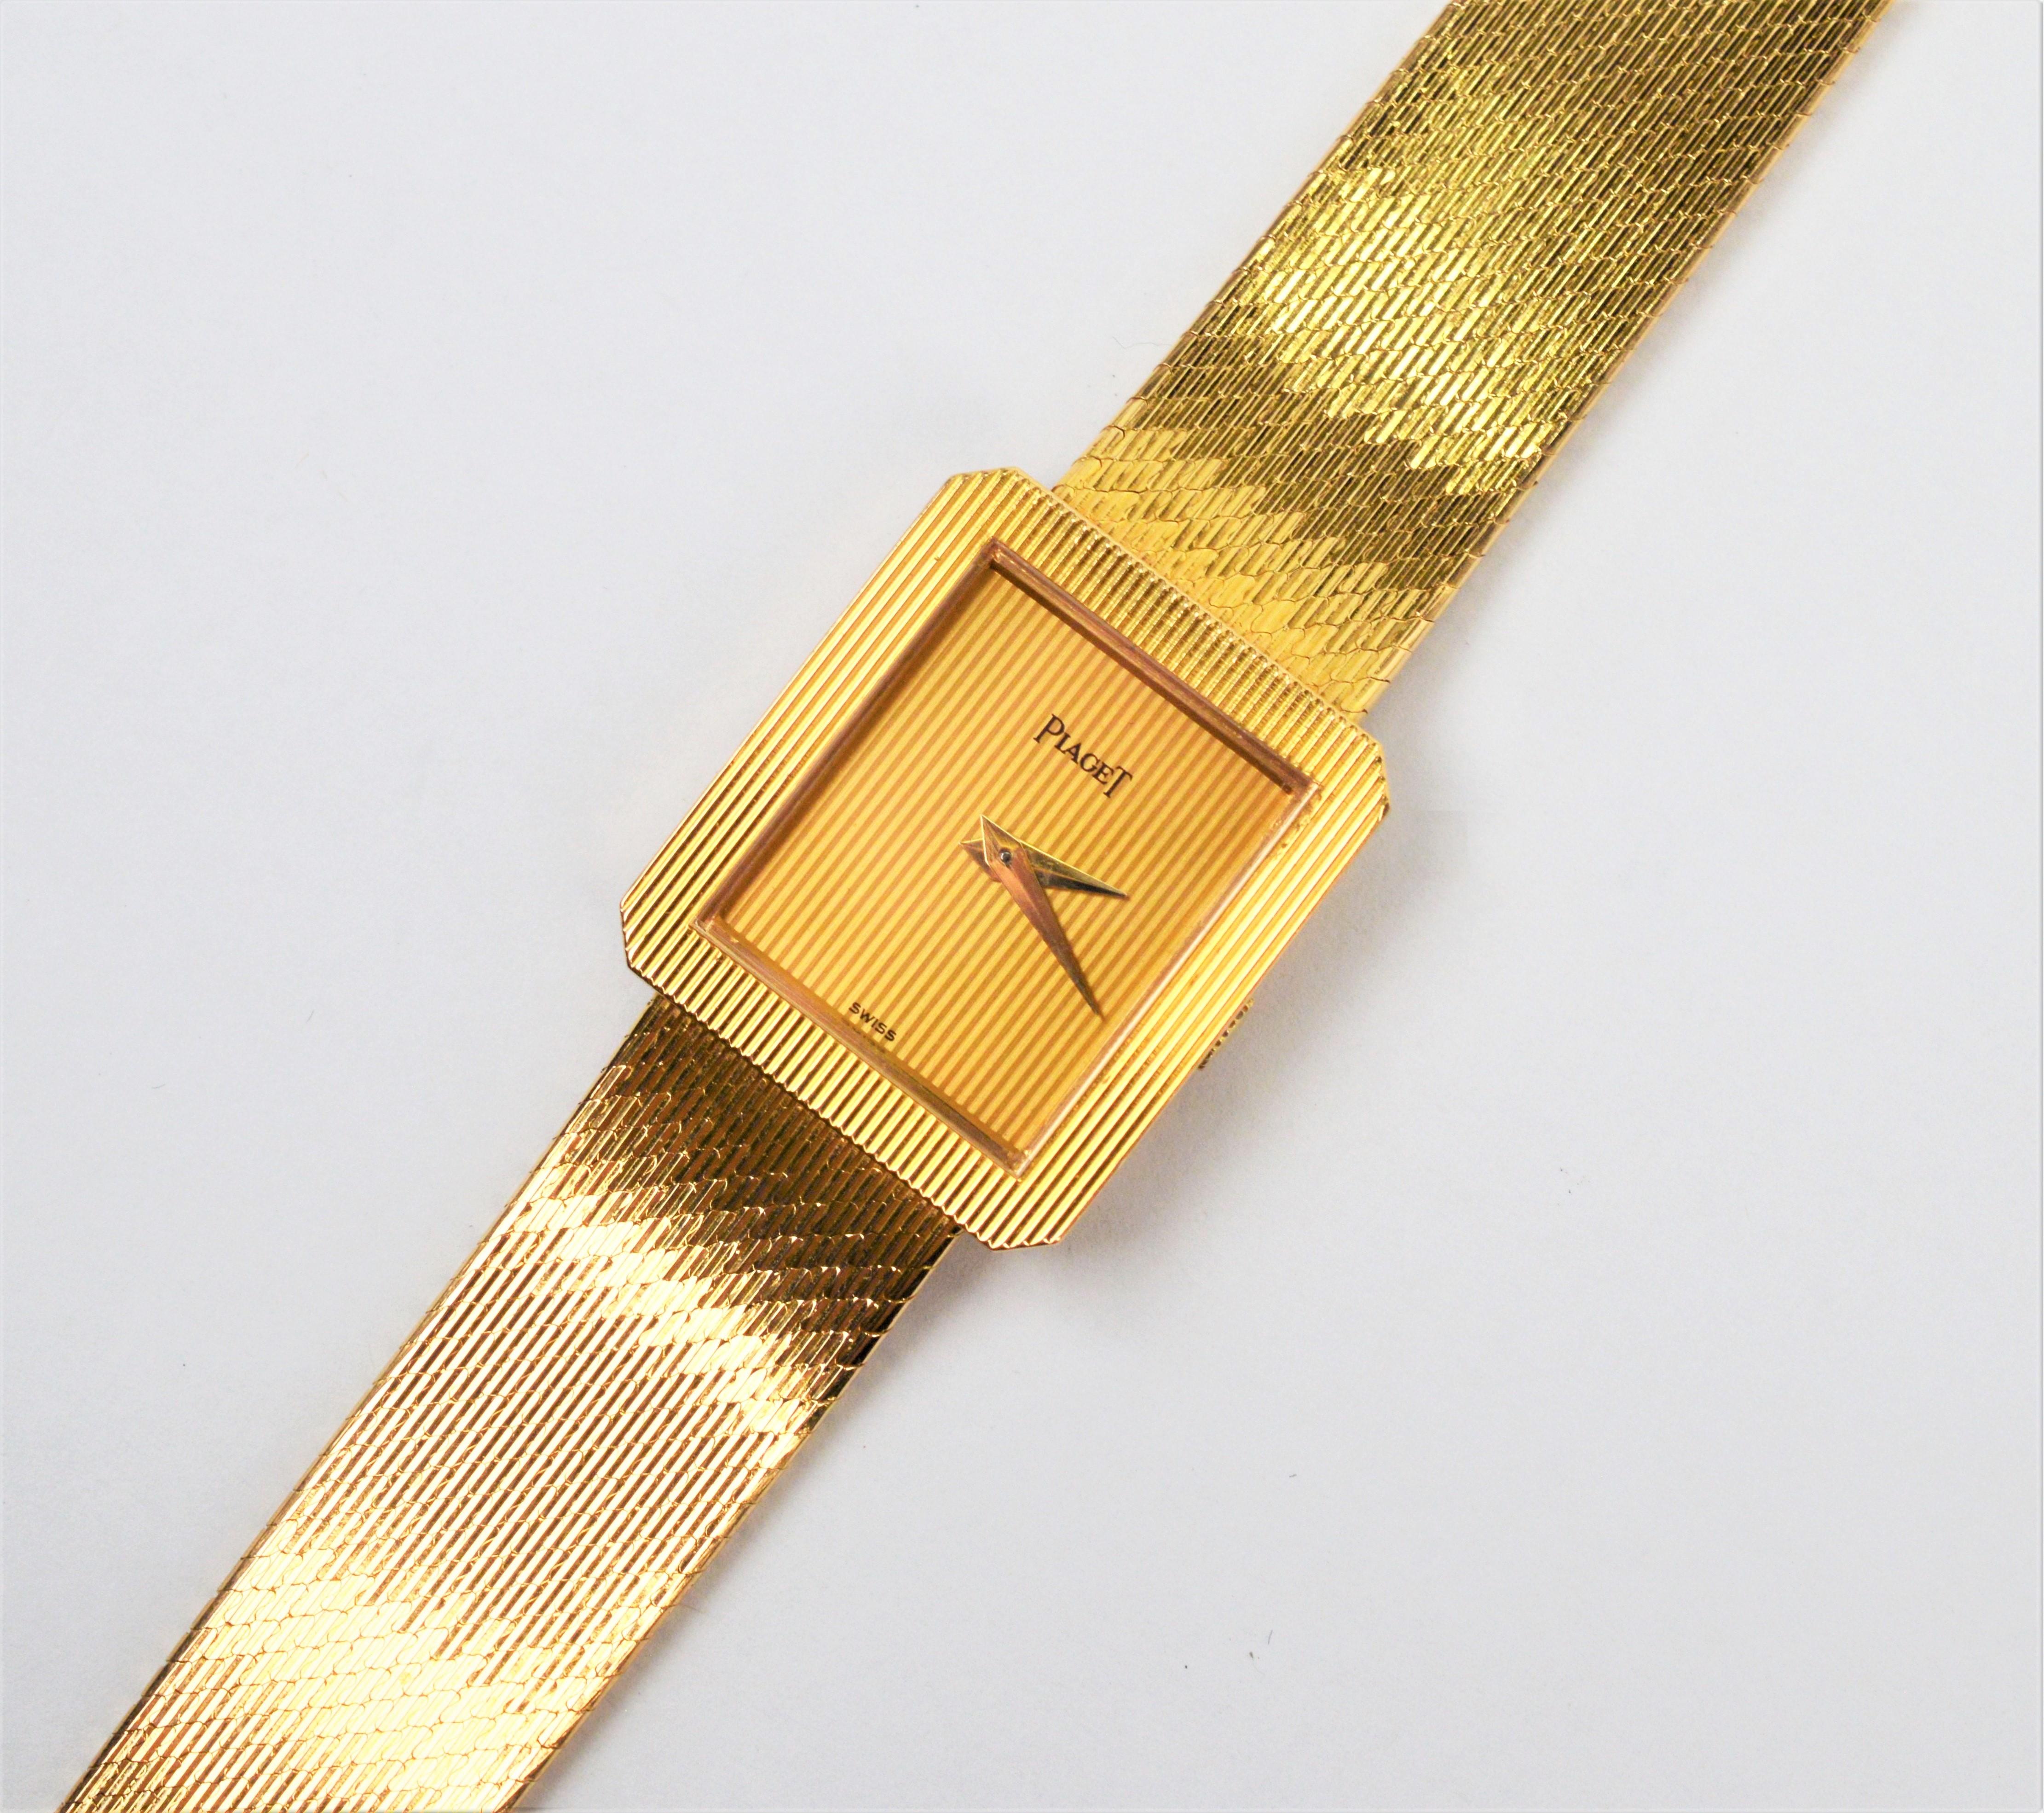 Piaget Protocol 18 Karat Gold Womens Bracelet Wrist Watch 1